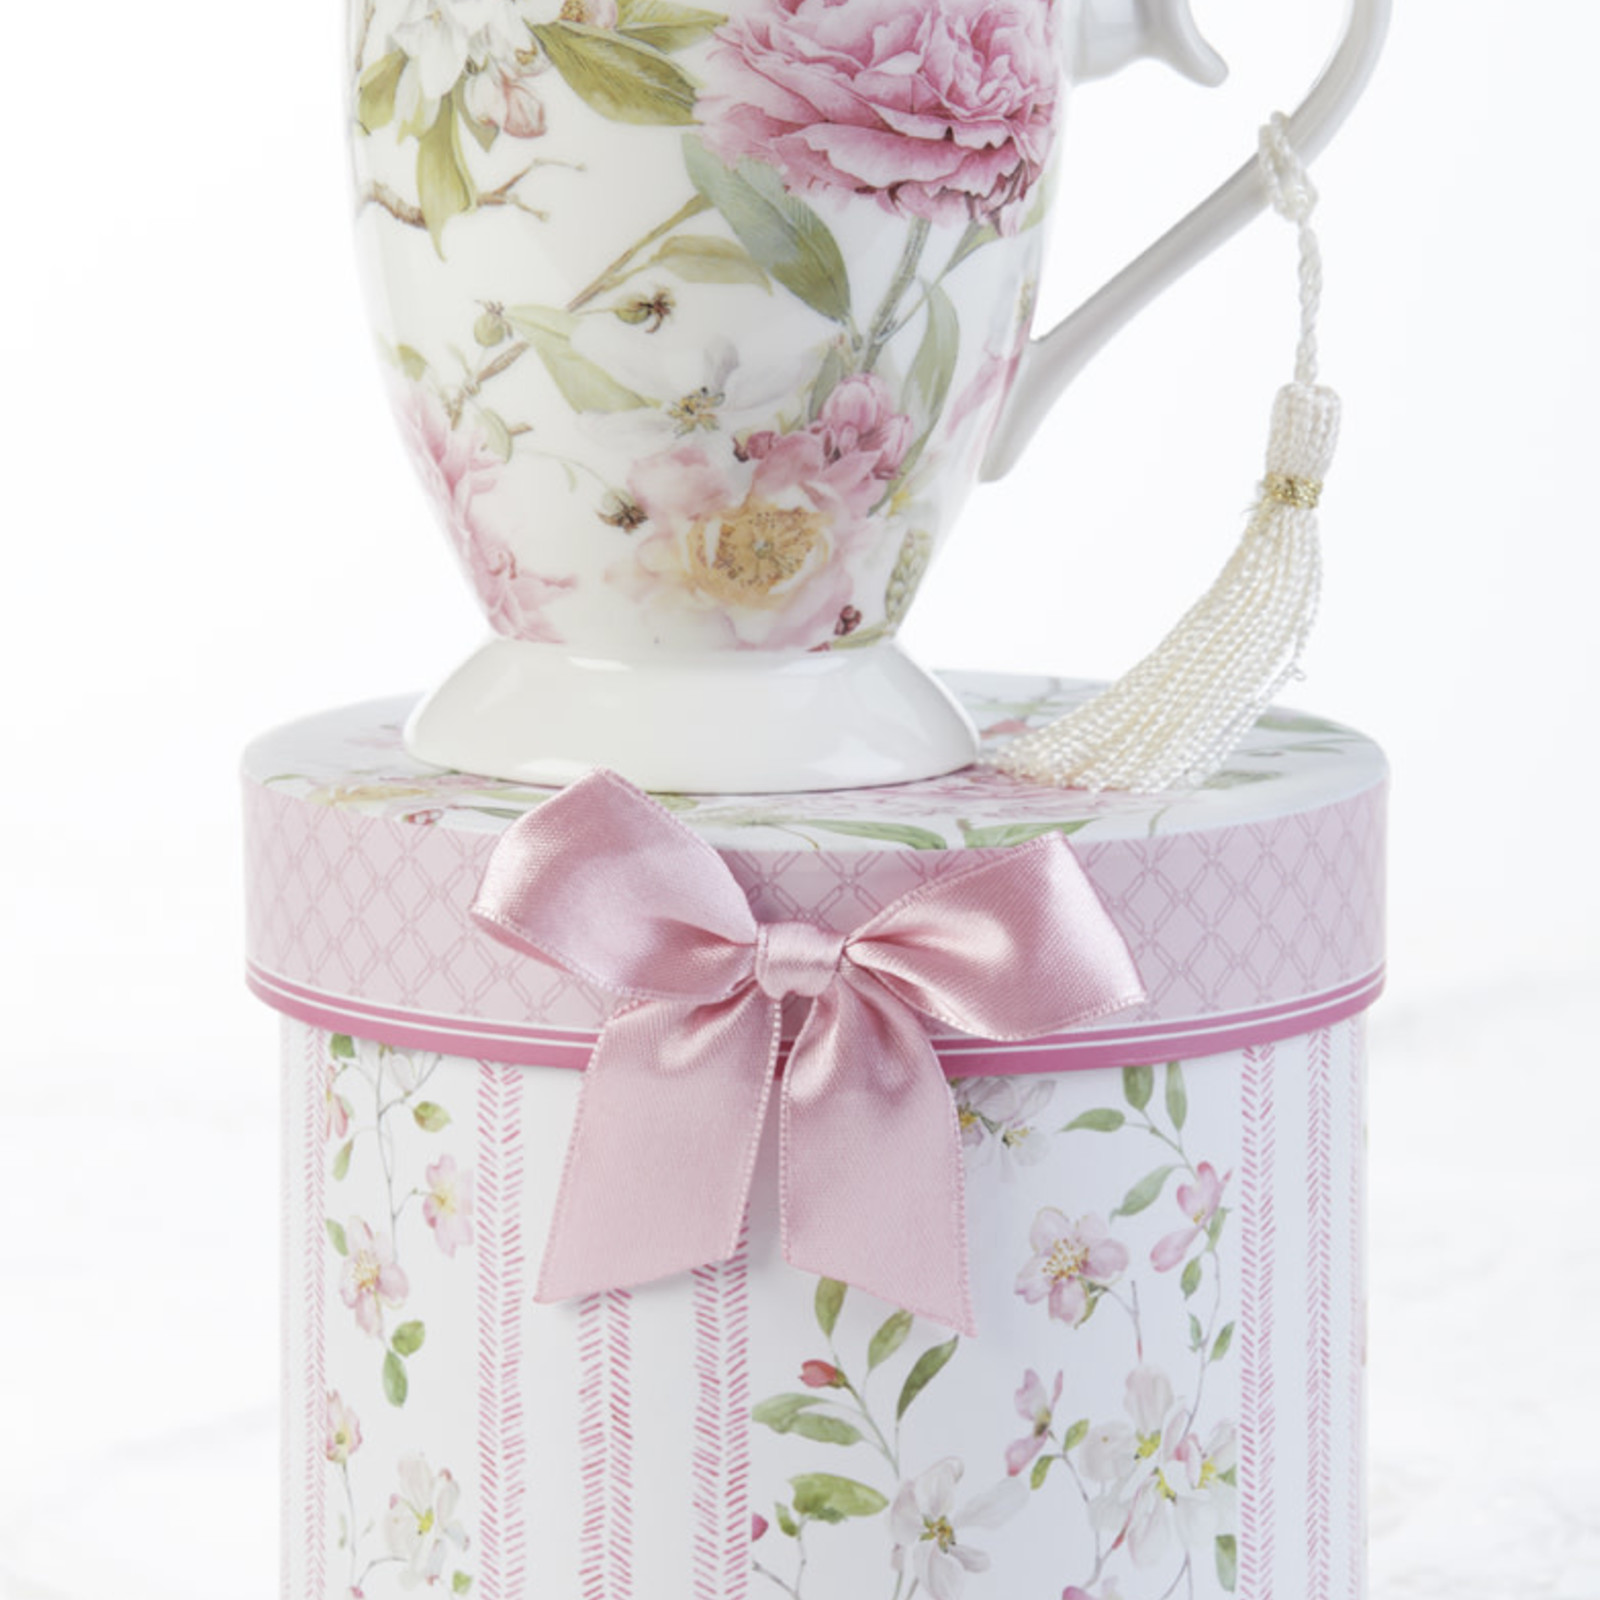 Delton Products 4.6" Porcelain Mug in Gift Box, Pink Peony   8148-6 loading=